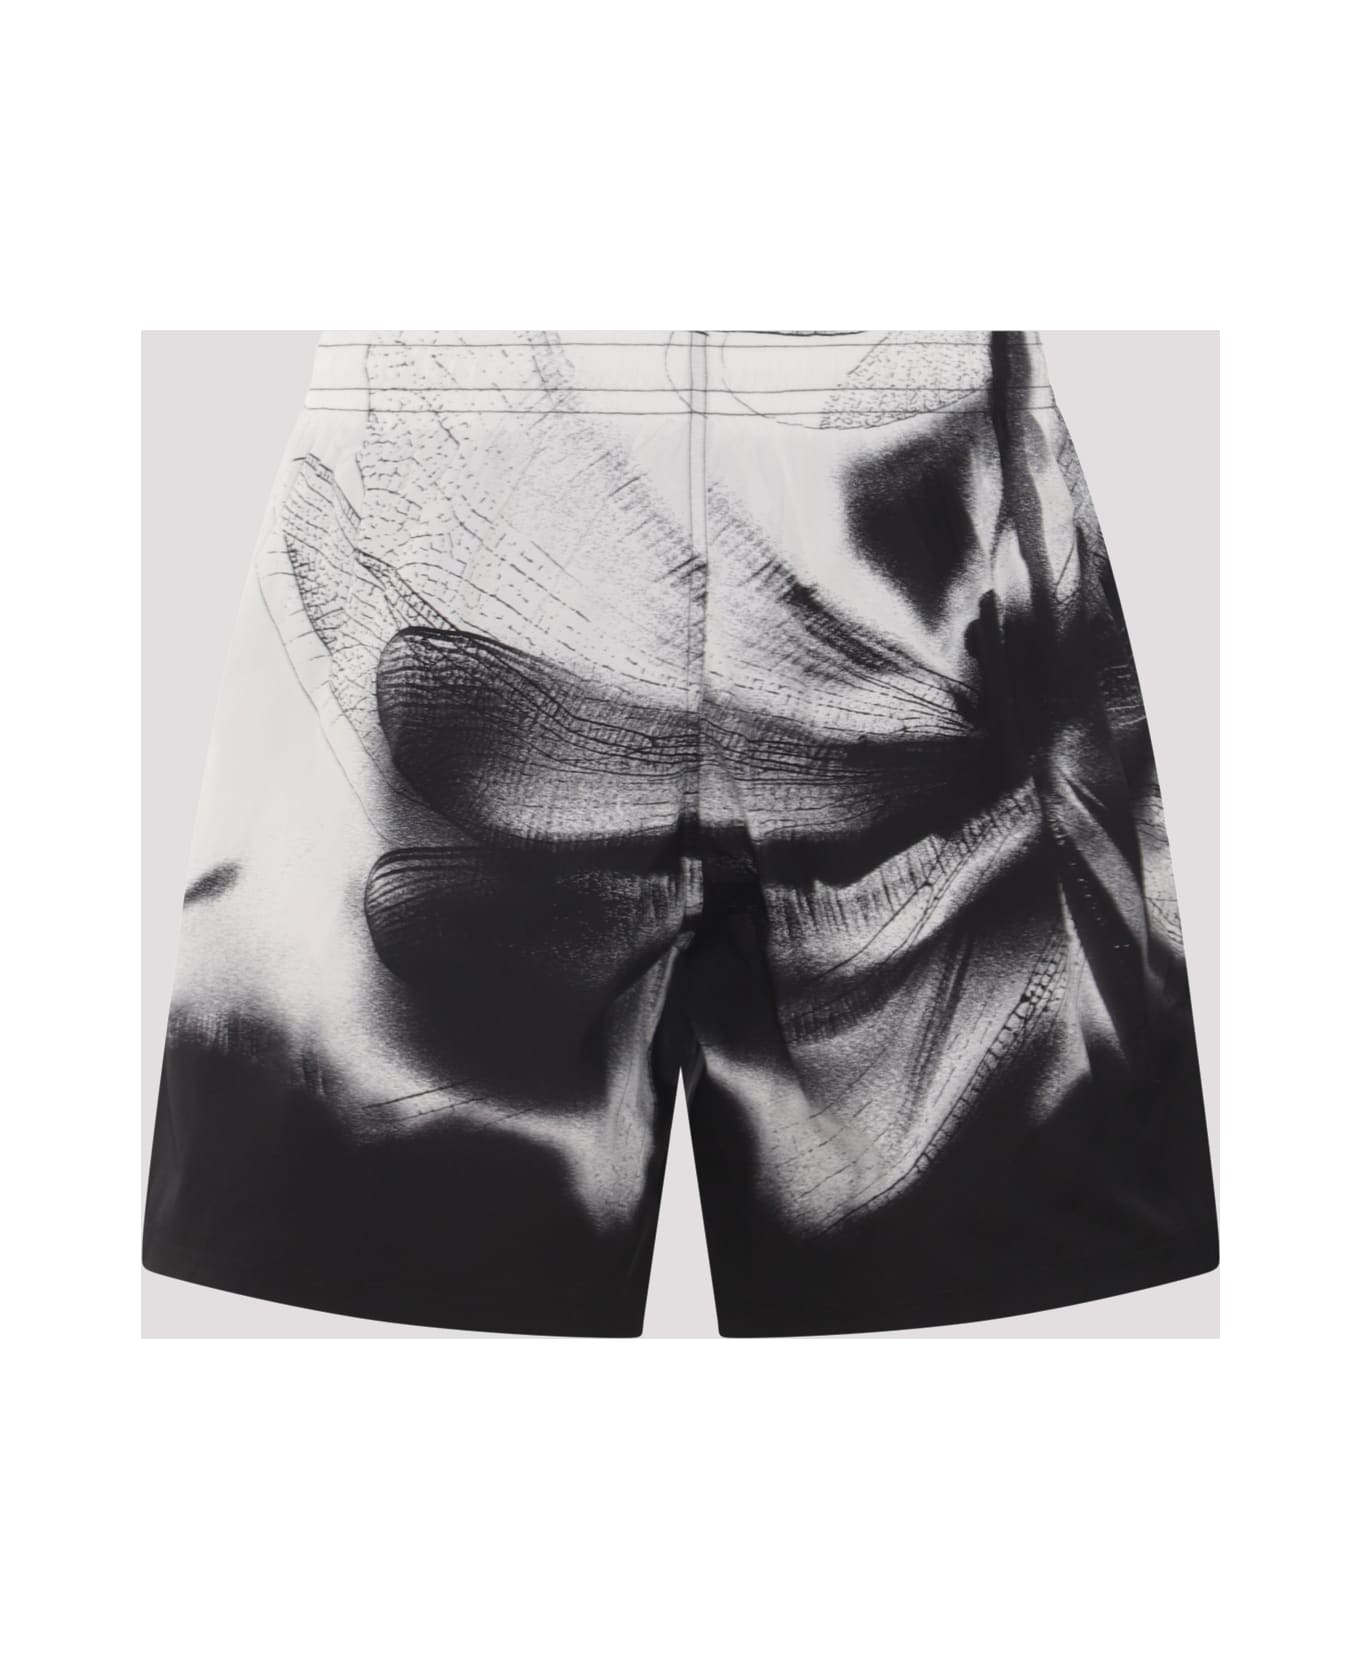 Alexander McQueen Black And White Dragonfly Swim Shorts - Black